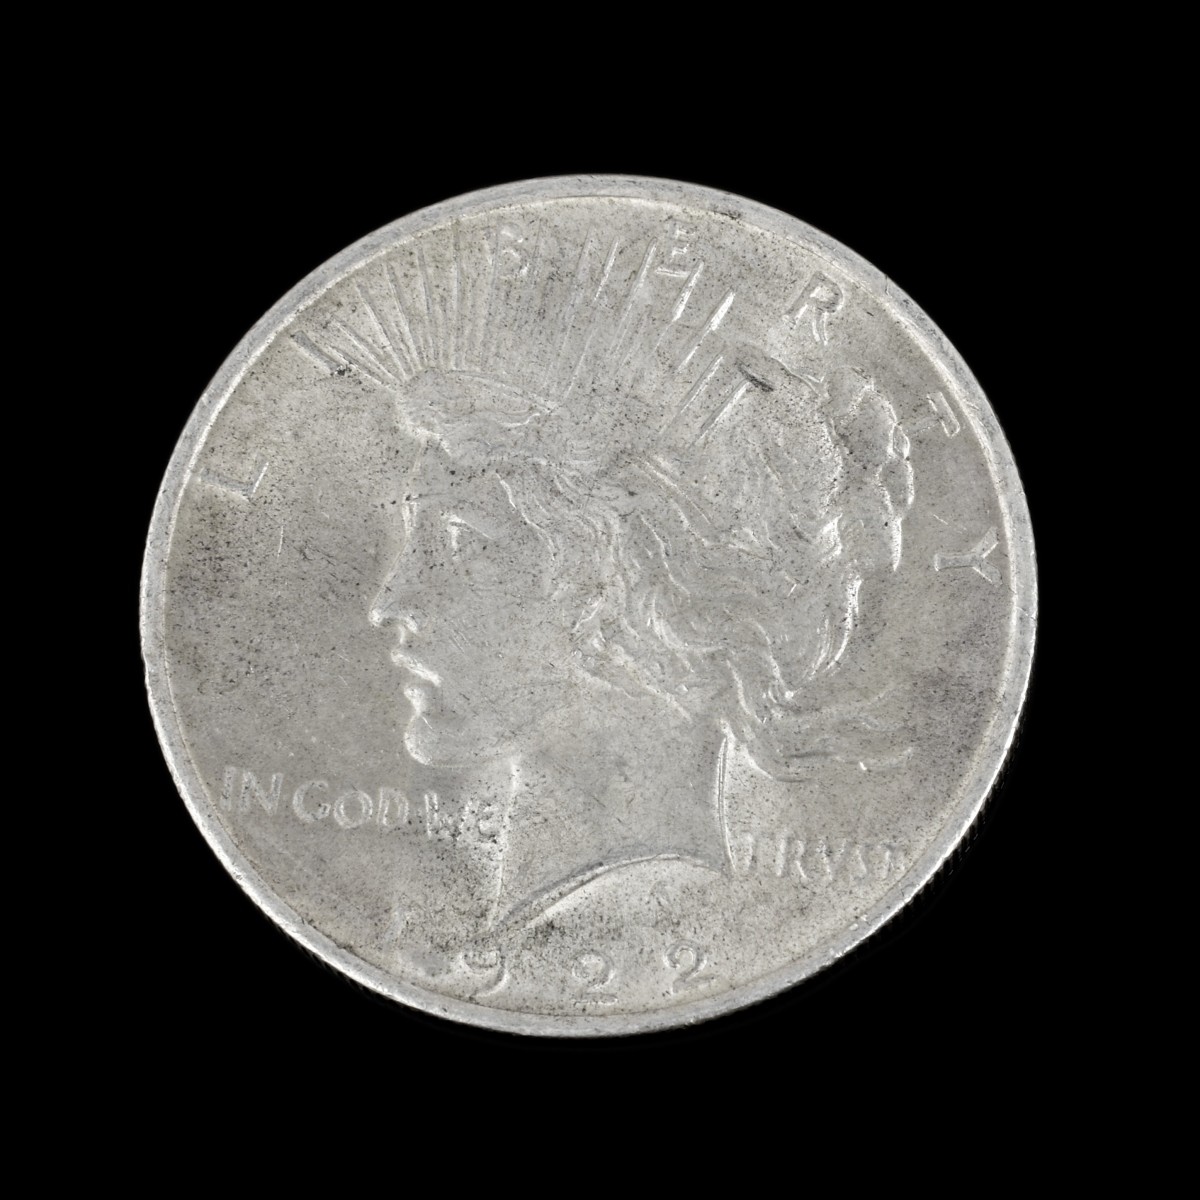 Ten U.S. Silver Dollars